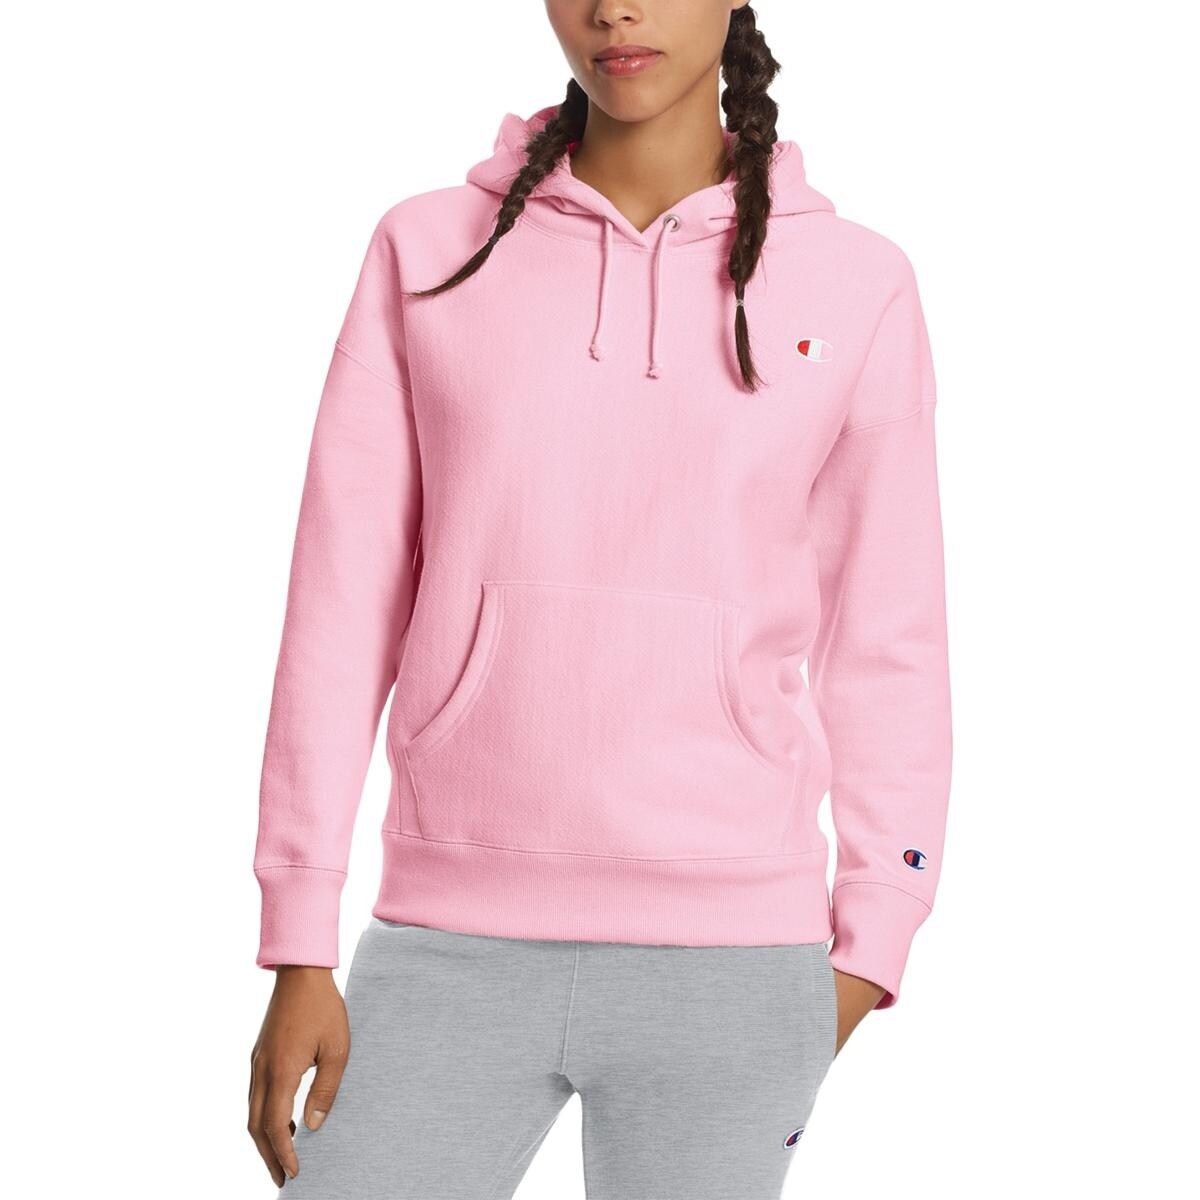 pink champion women's hoodie